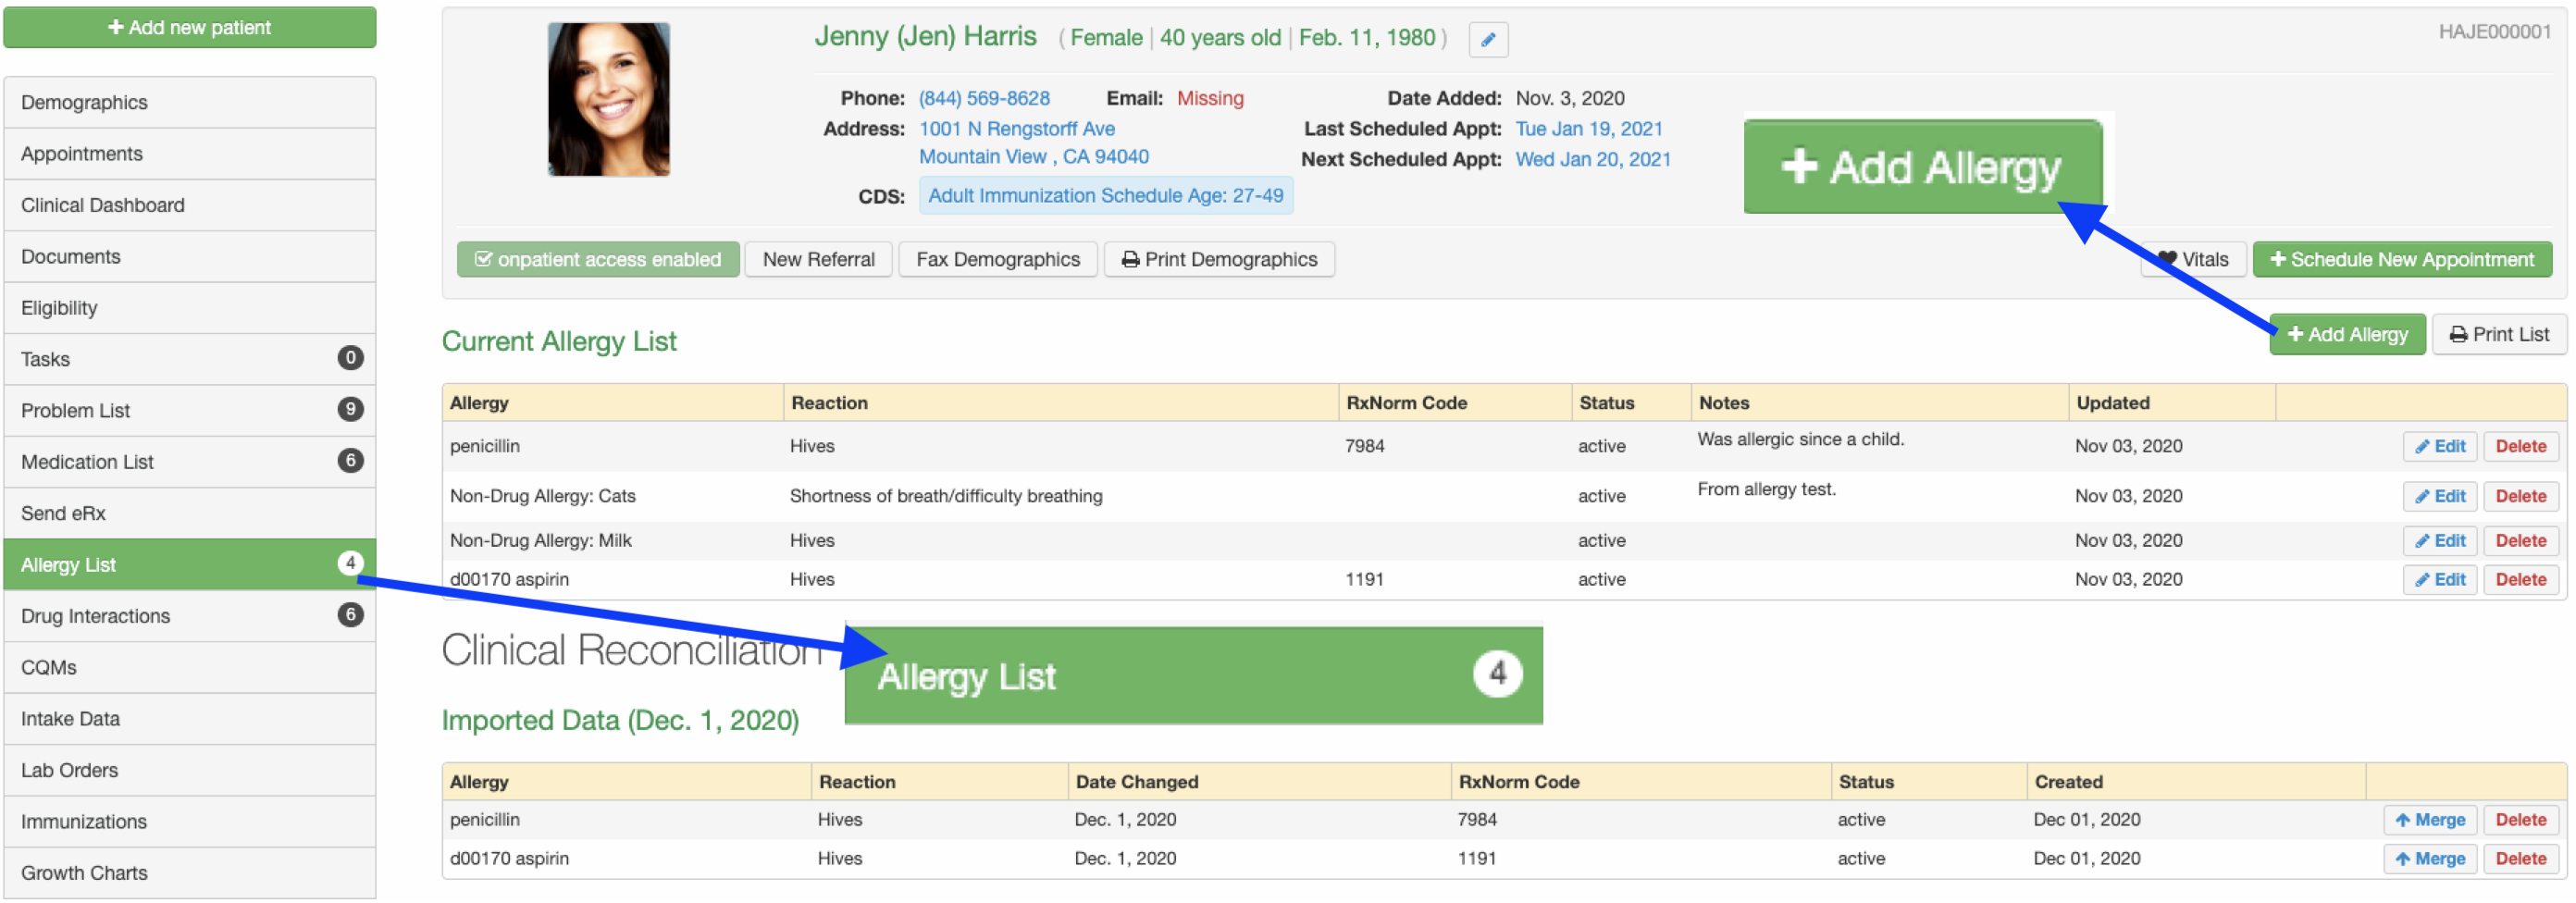 Allergy_List_Enlarged.png